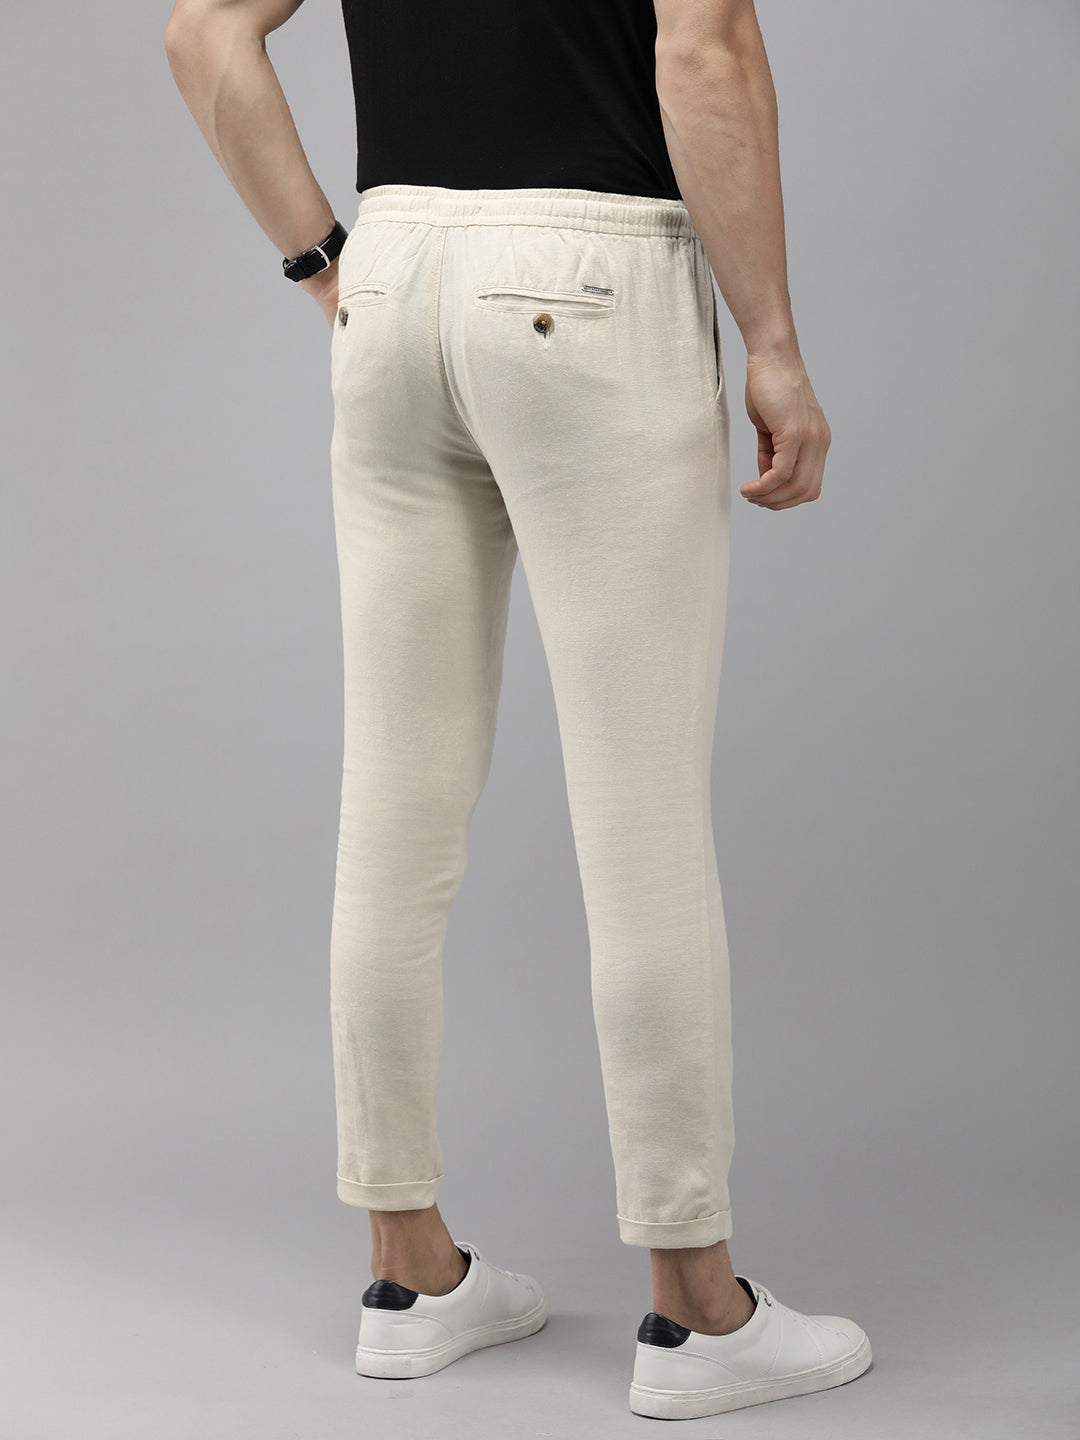 KETCH Tapered Men Cream Trousers  Buy KETCH Tapered Men Cream Trousers  Online at Best Prices in India  Flipkartcom